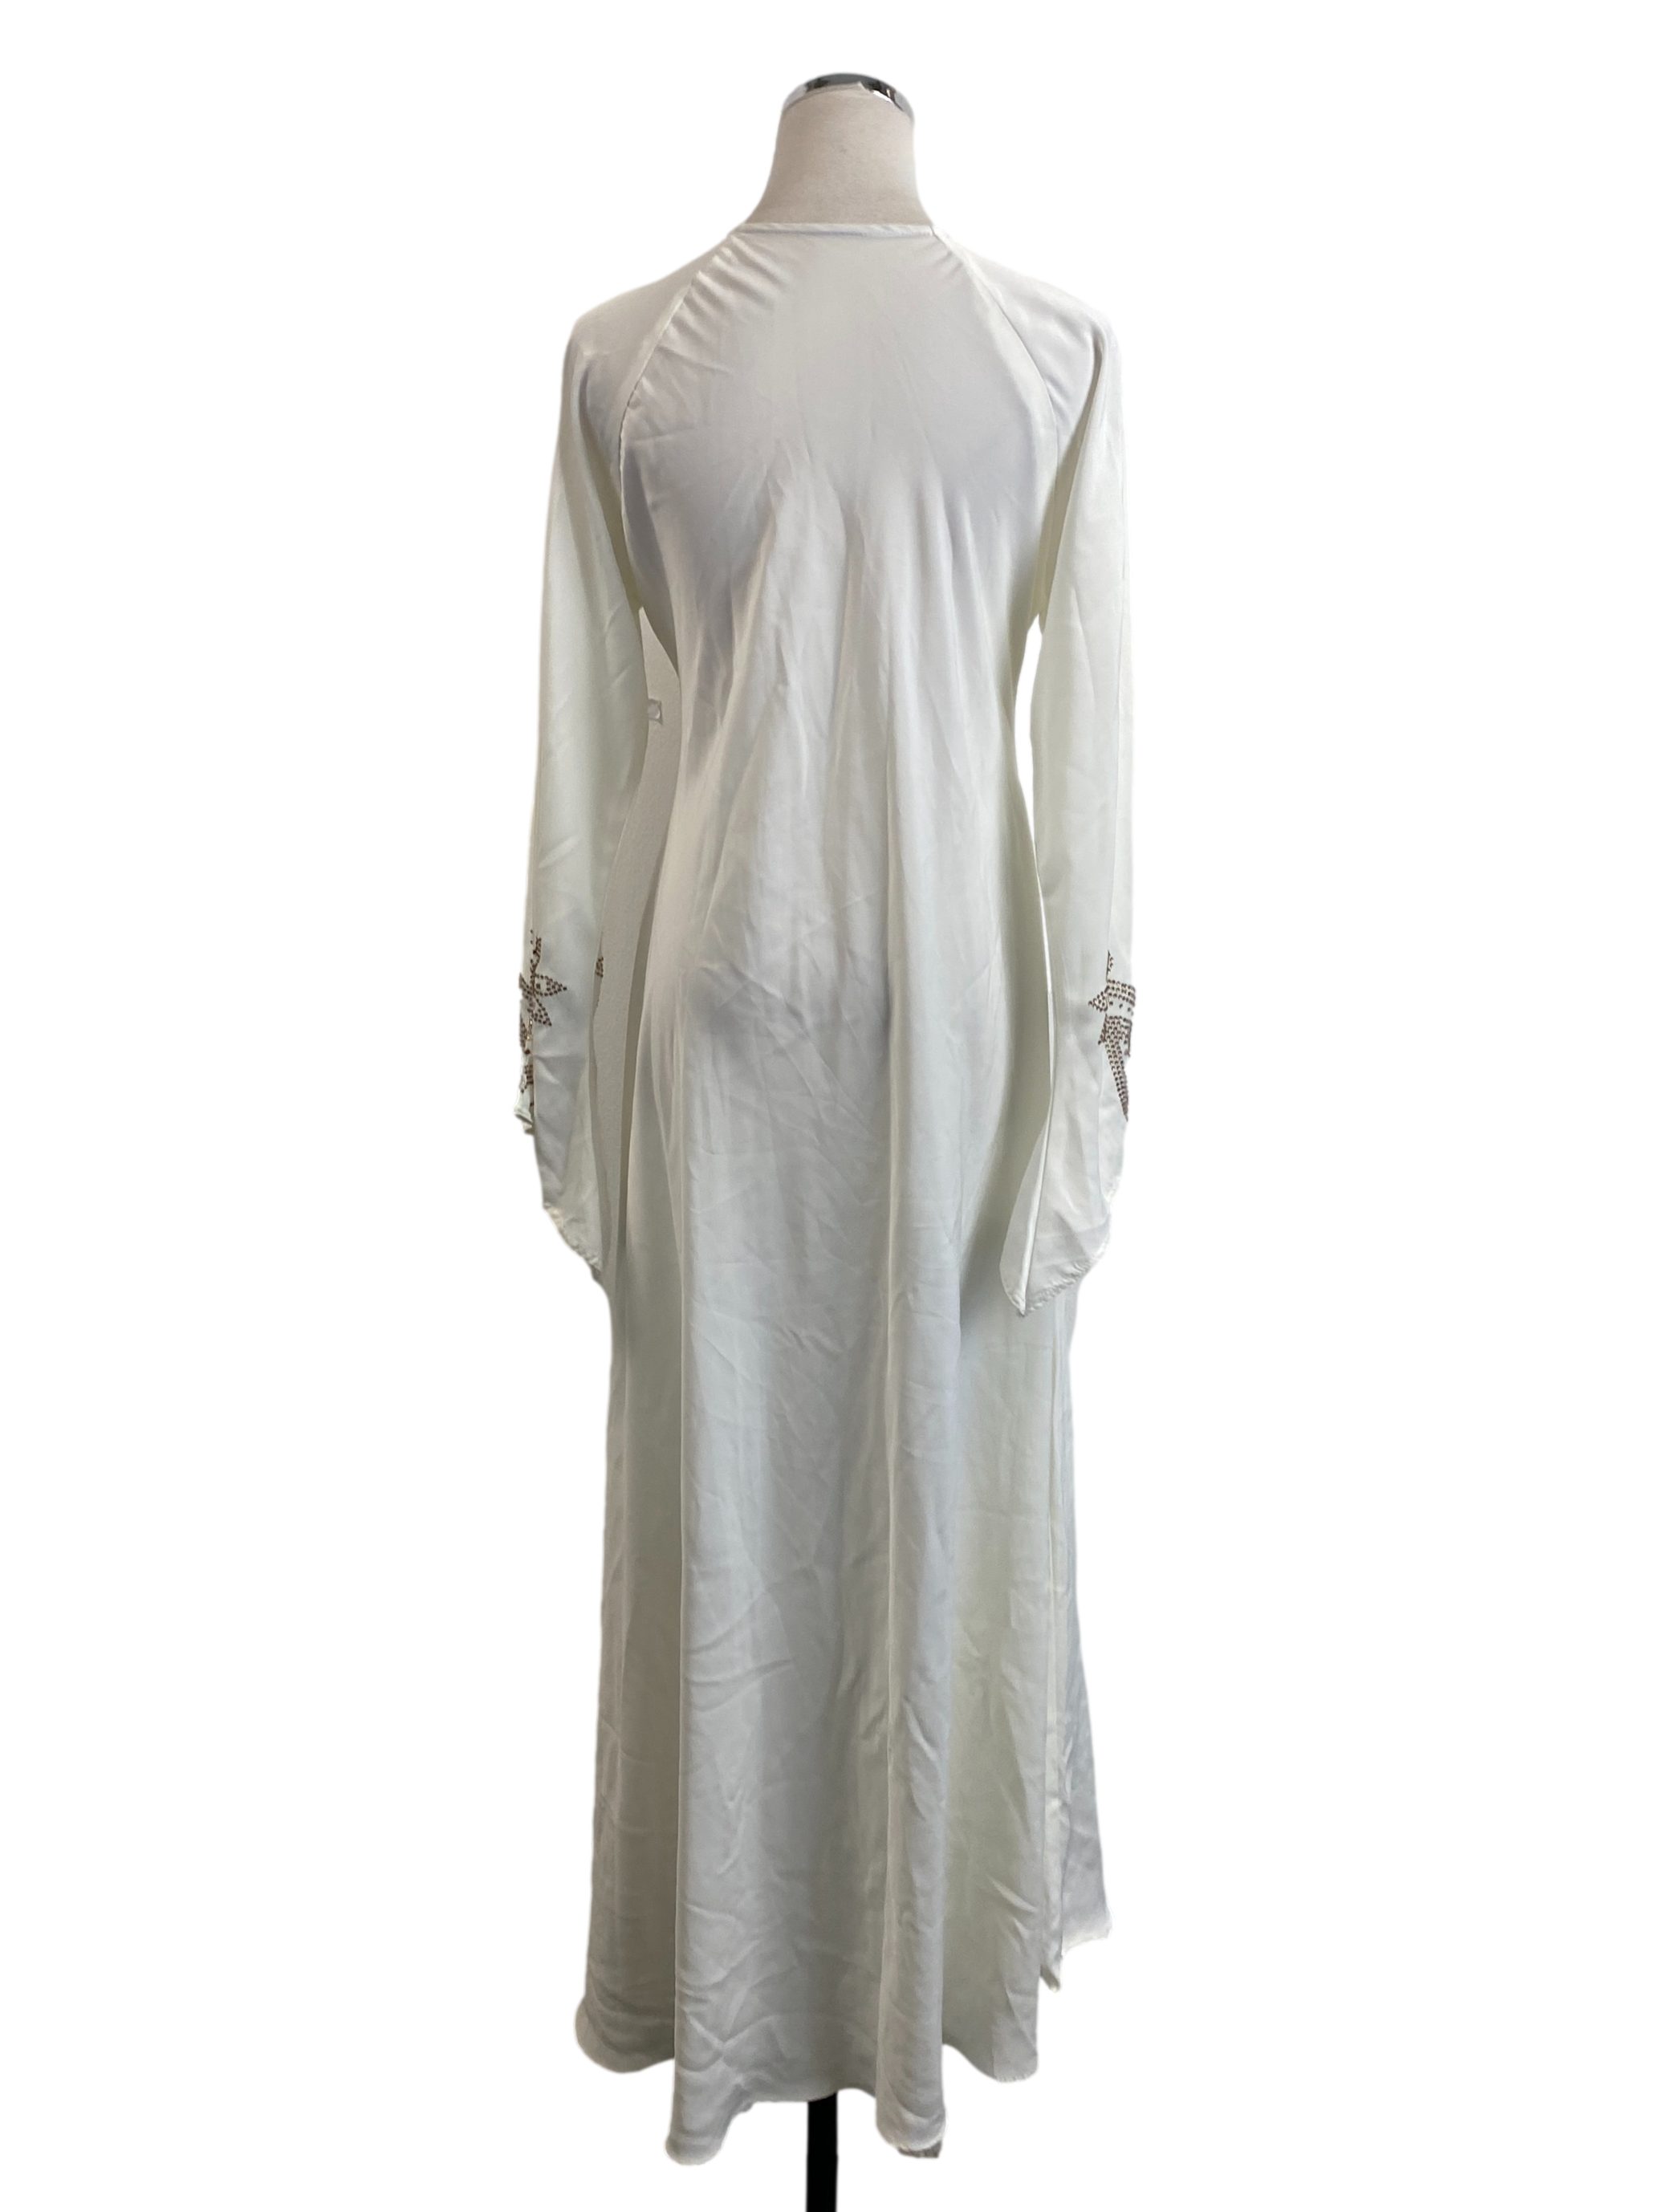 Procelain White Long Sleeve Dress